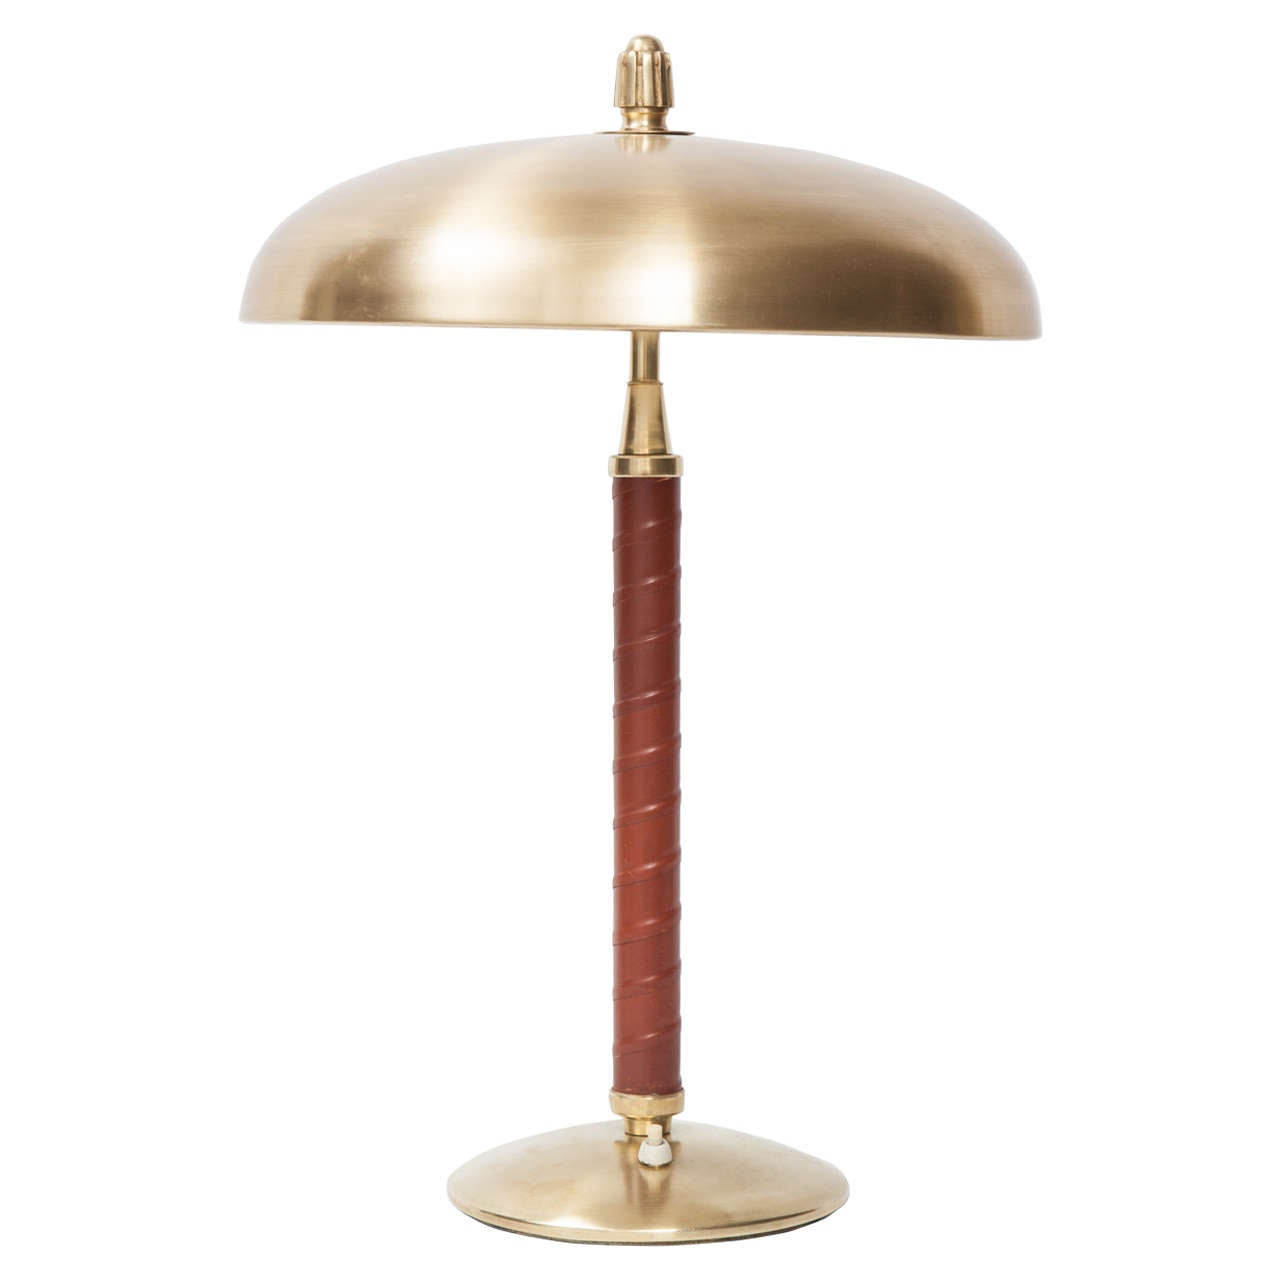 A Swedish Modern Table Lamp